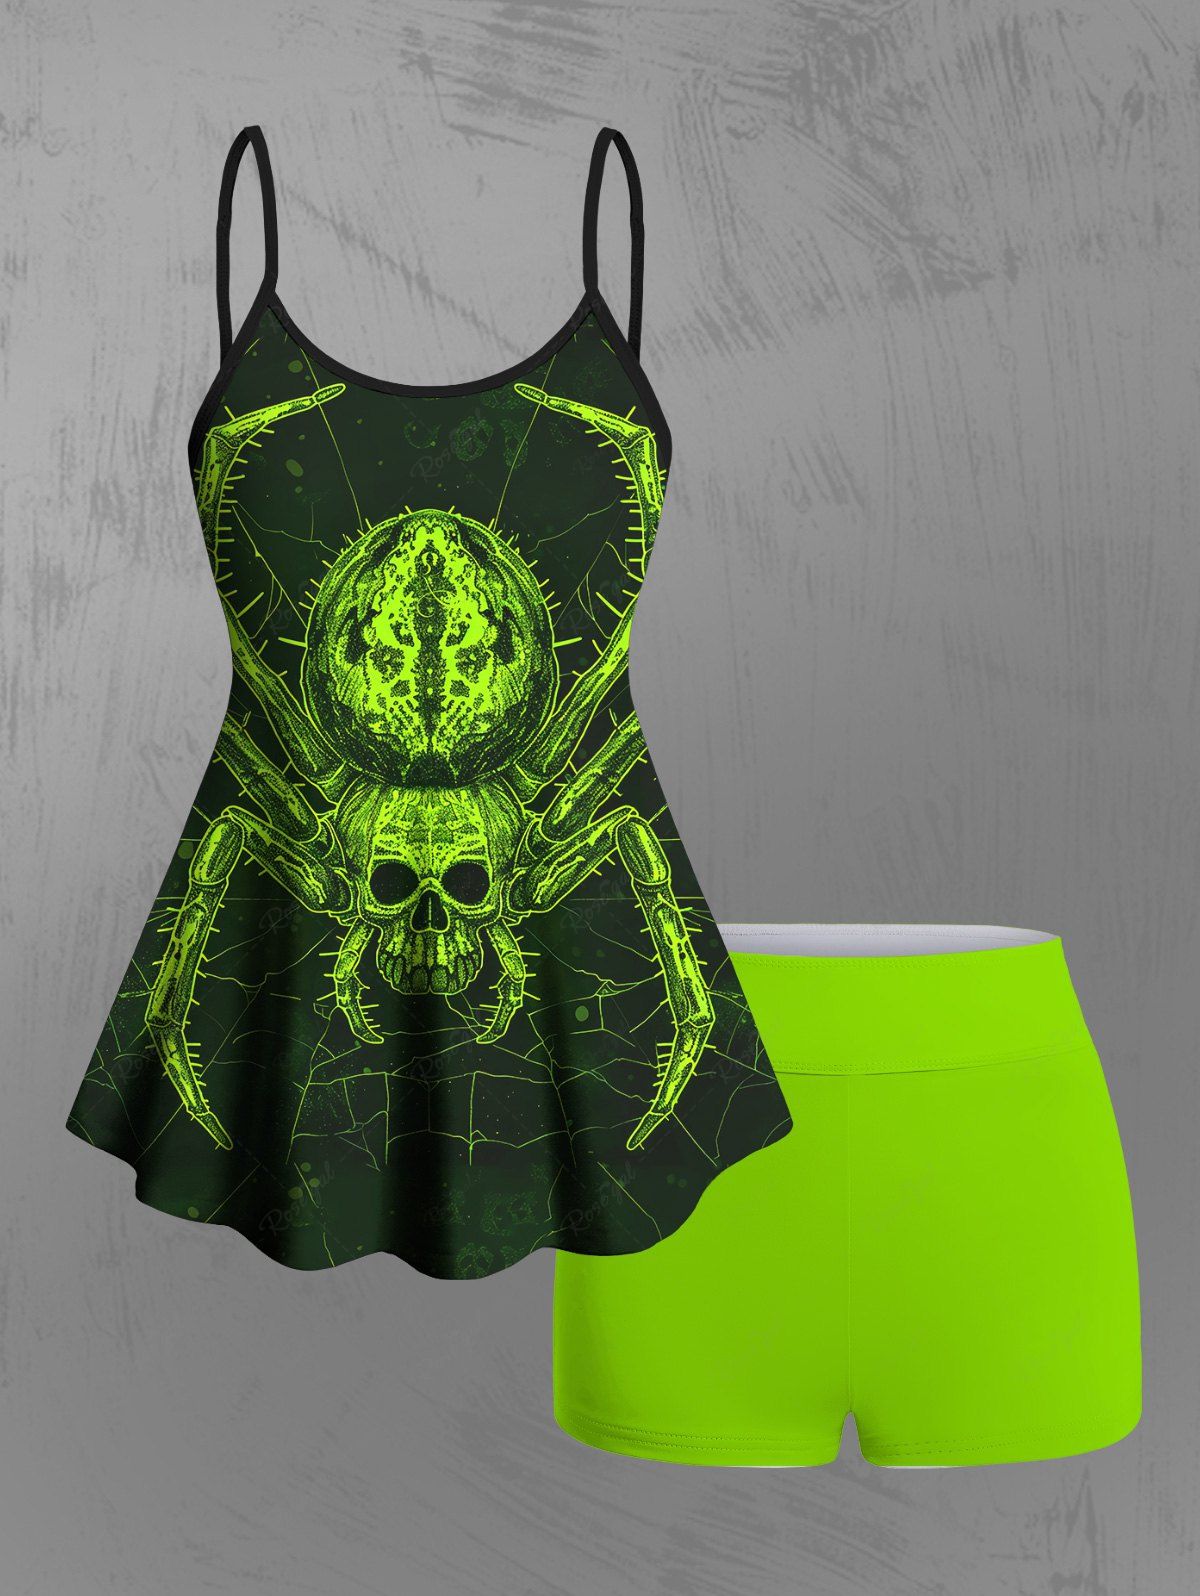 Gothic Glitter Skull Spider Print Boyleg Tankini Swimsuit (Adjustable Shoulder Strap)